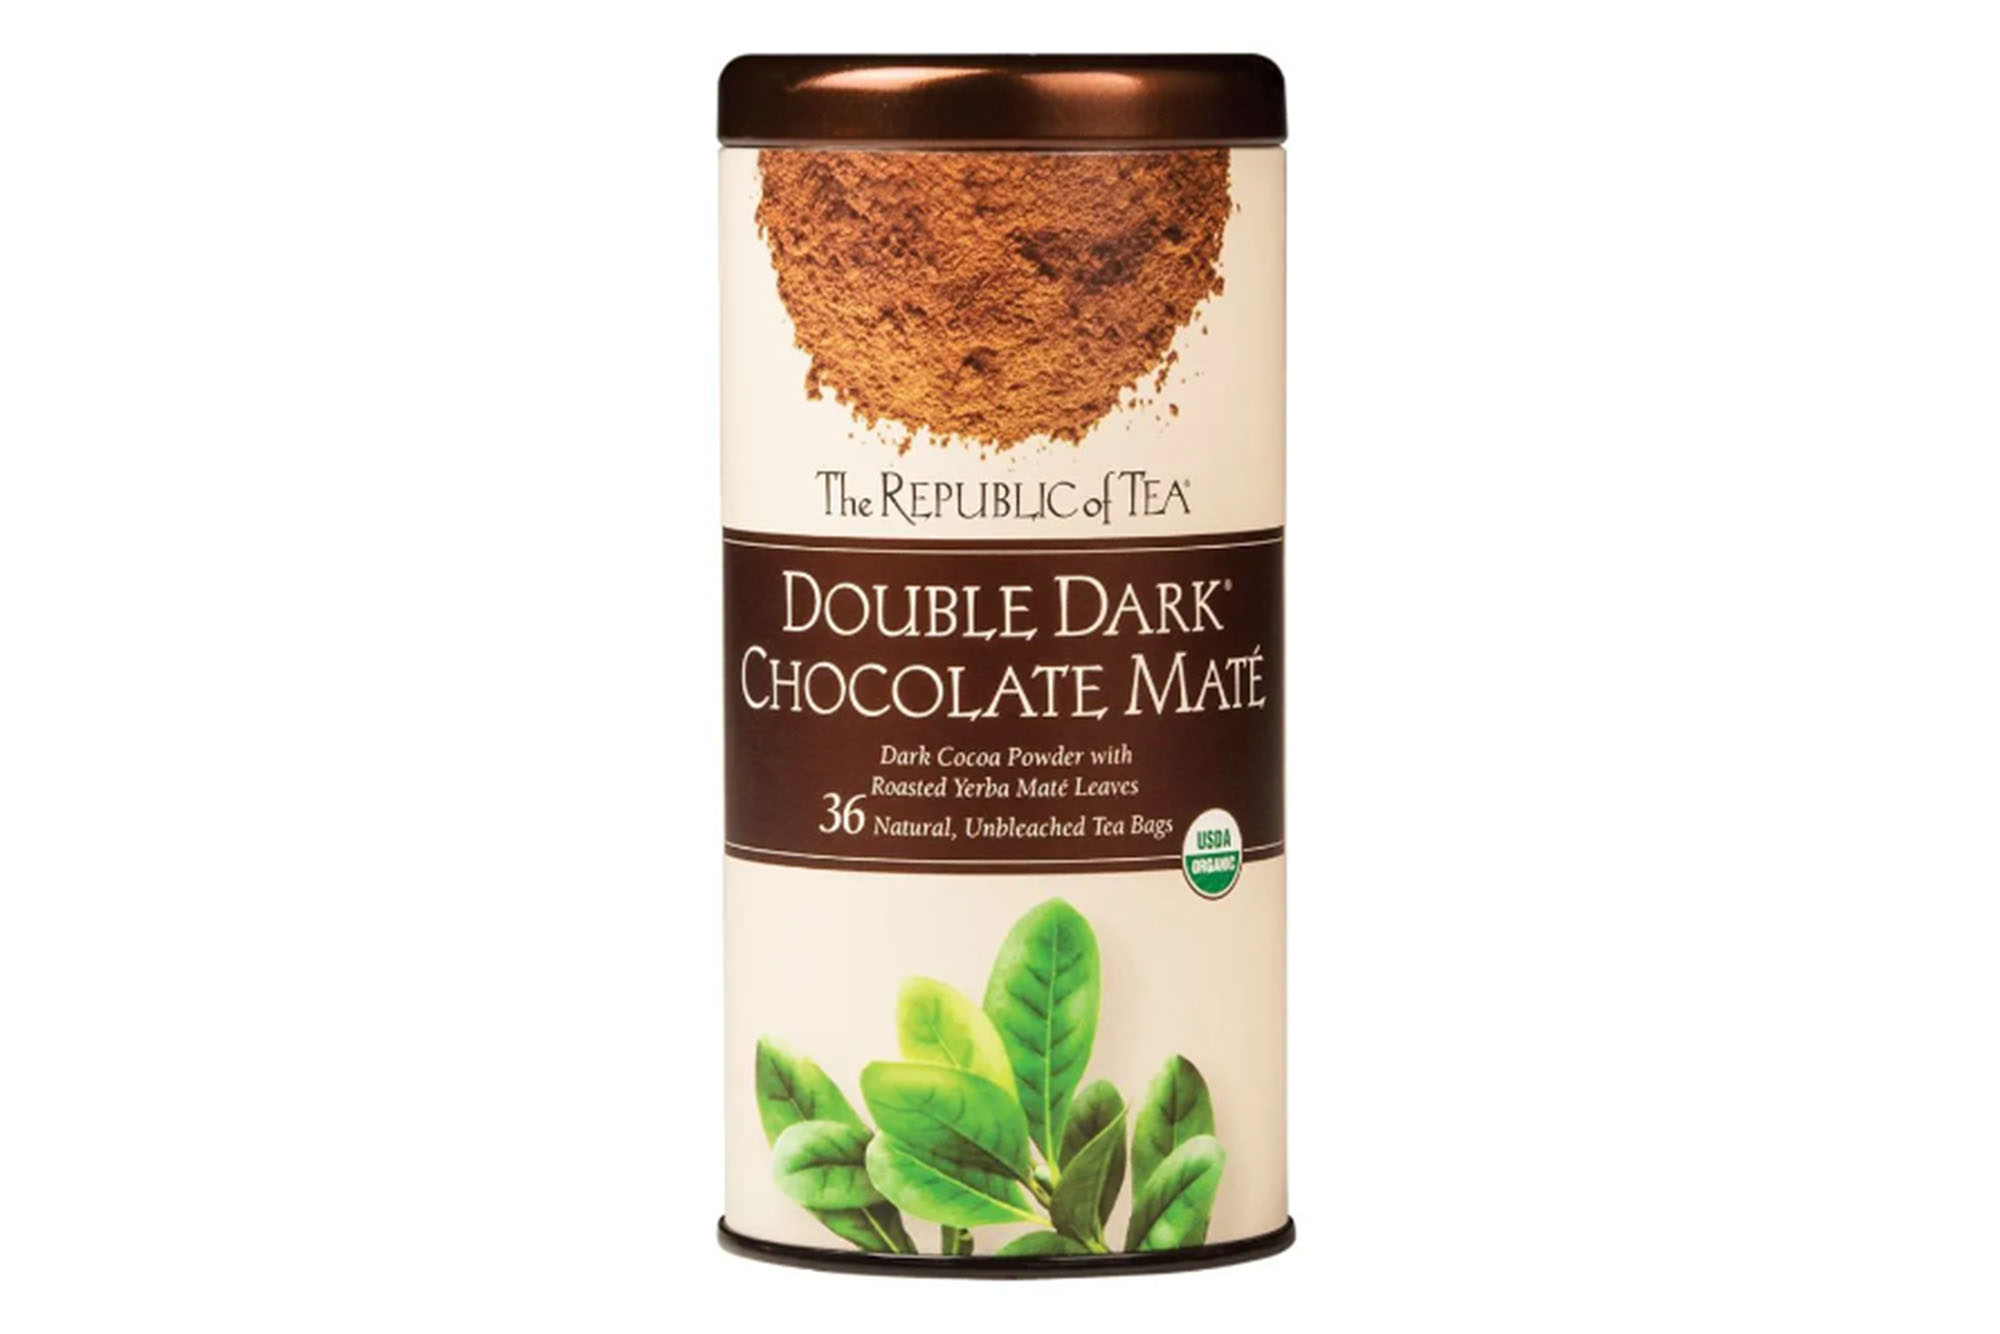 The Republic of Tea Double Dark Chocolate Mate